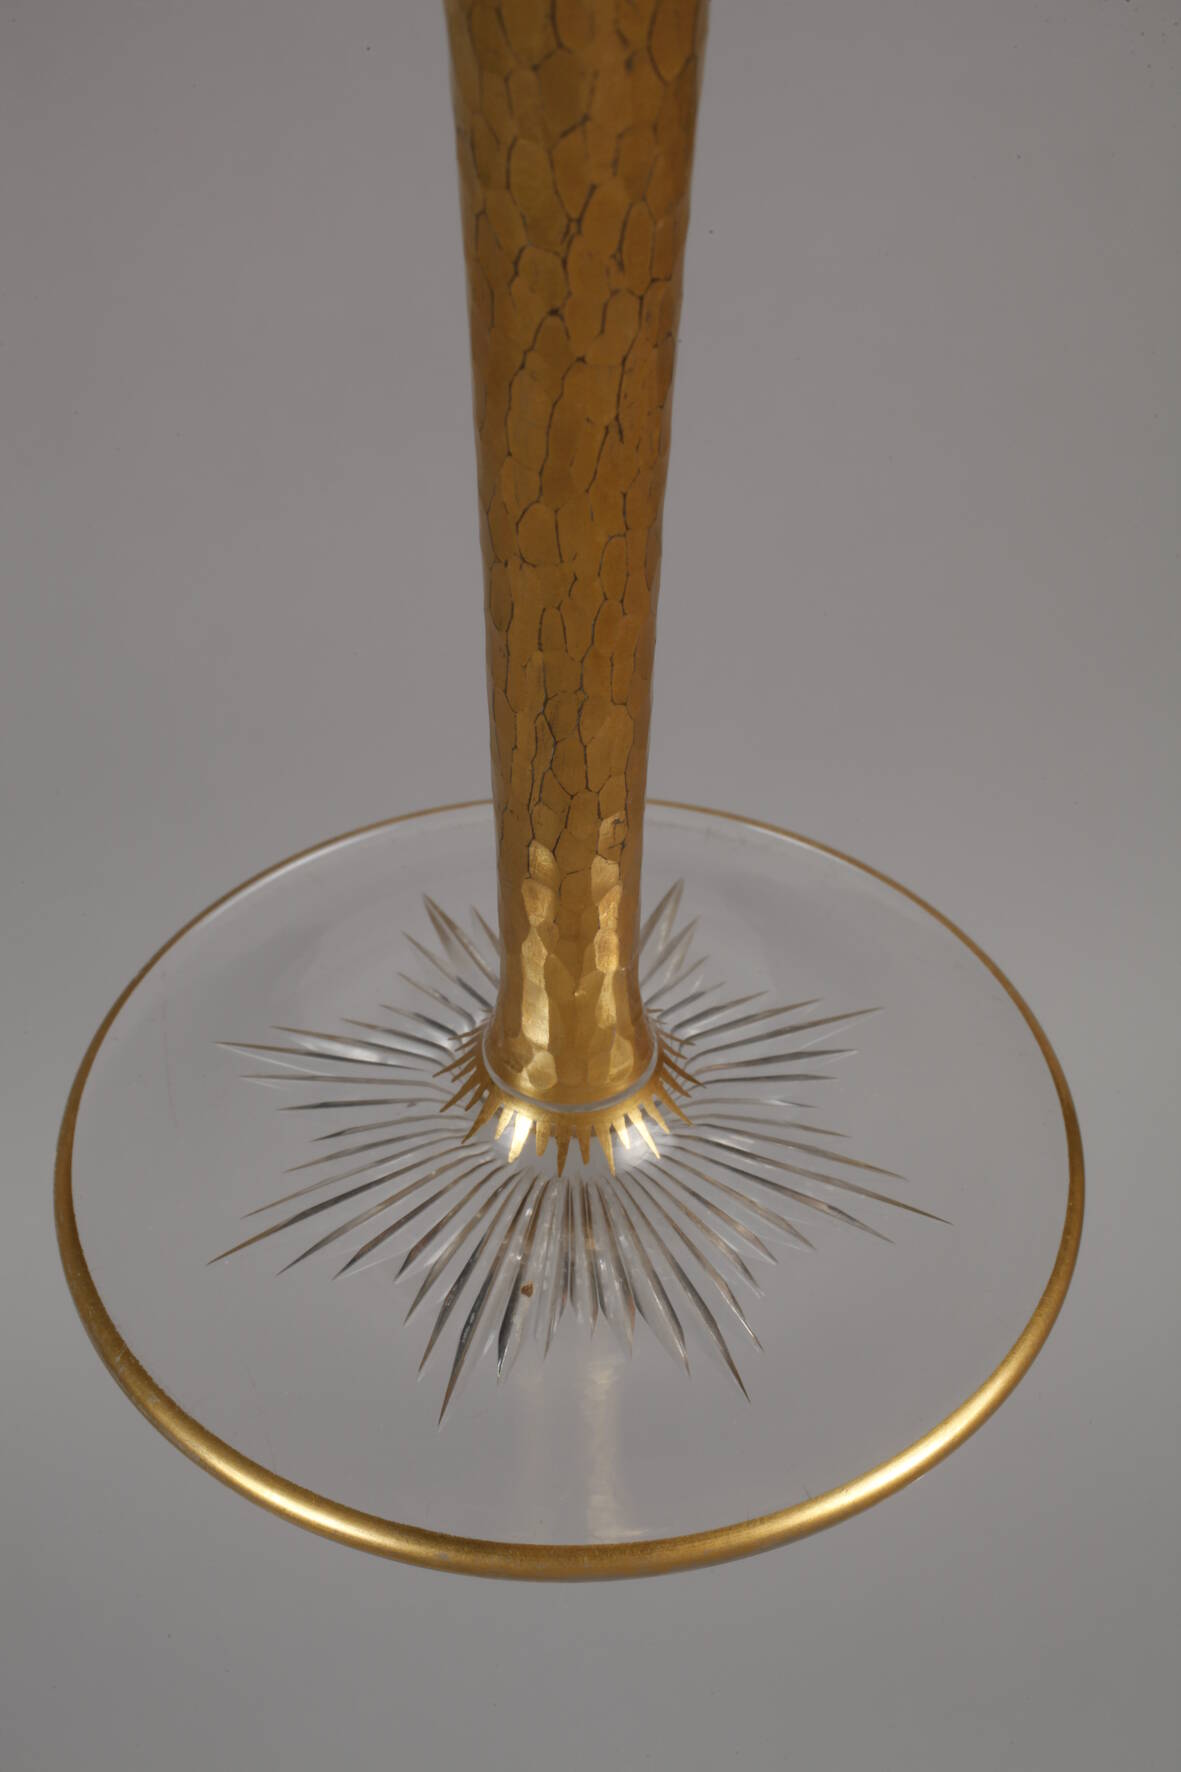 Champagne goblet gold decor - Image 4 of 4